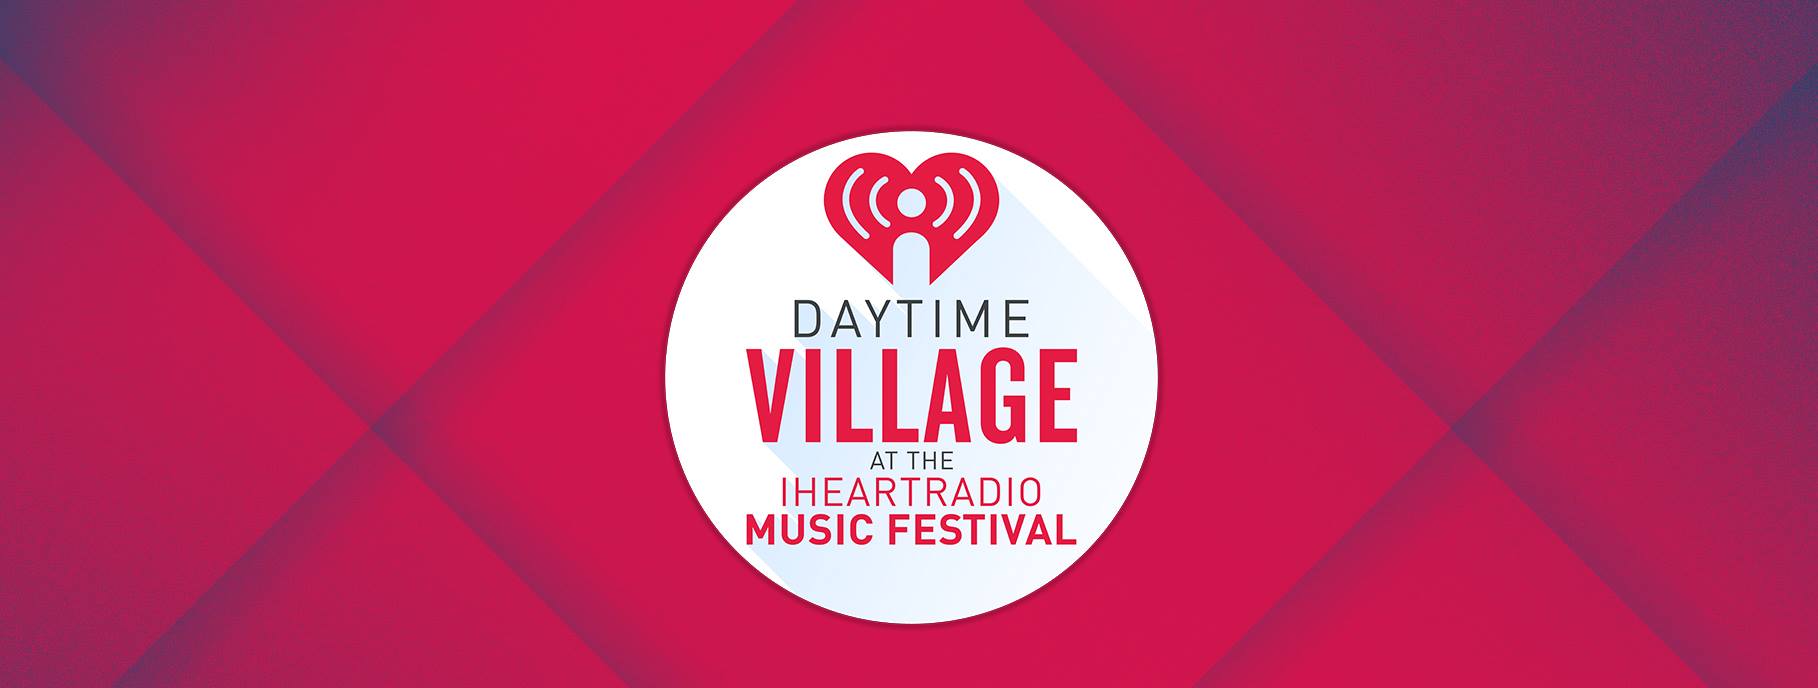 iHeartRadio Music Festival Daytime Village. Photo by: iHeartRadio Music Festival